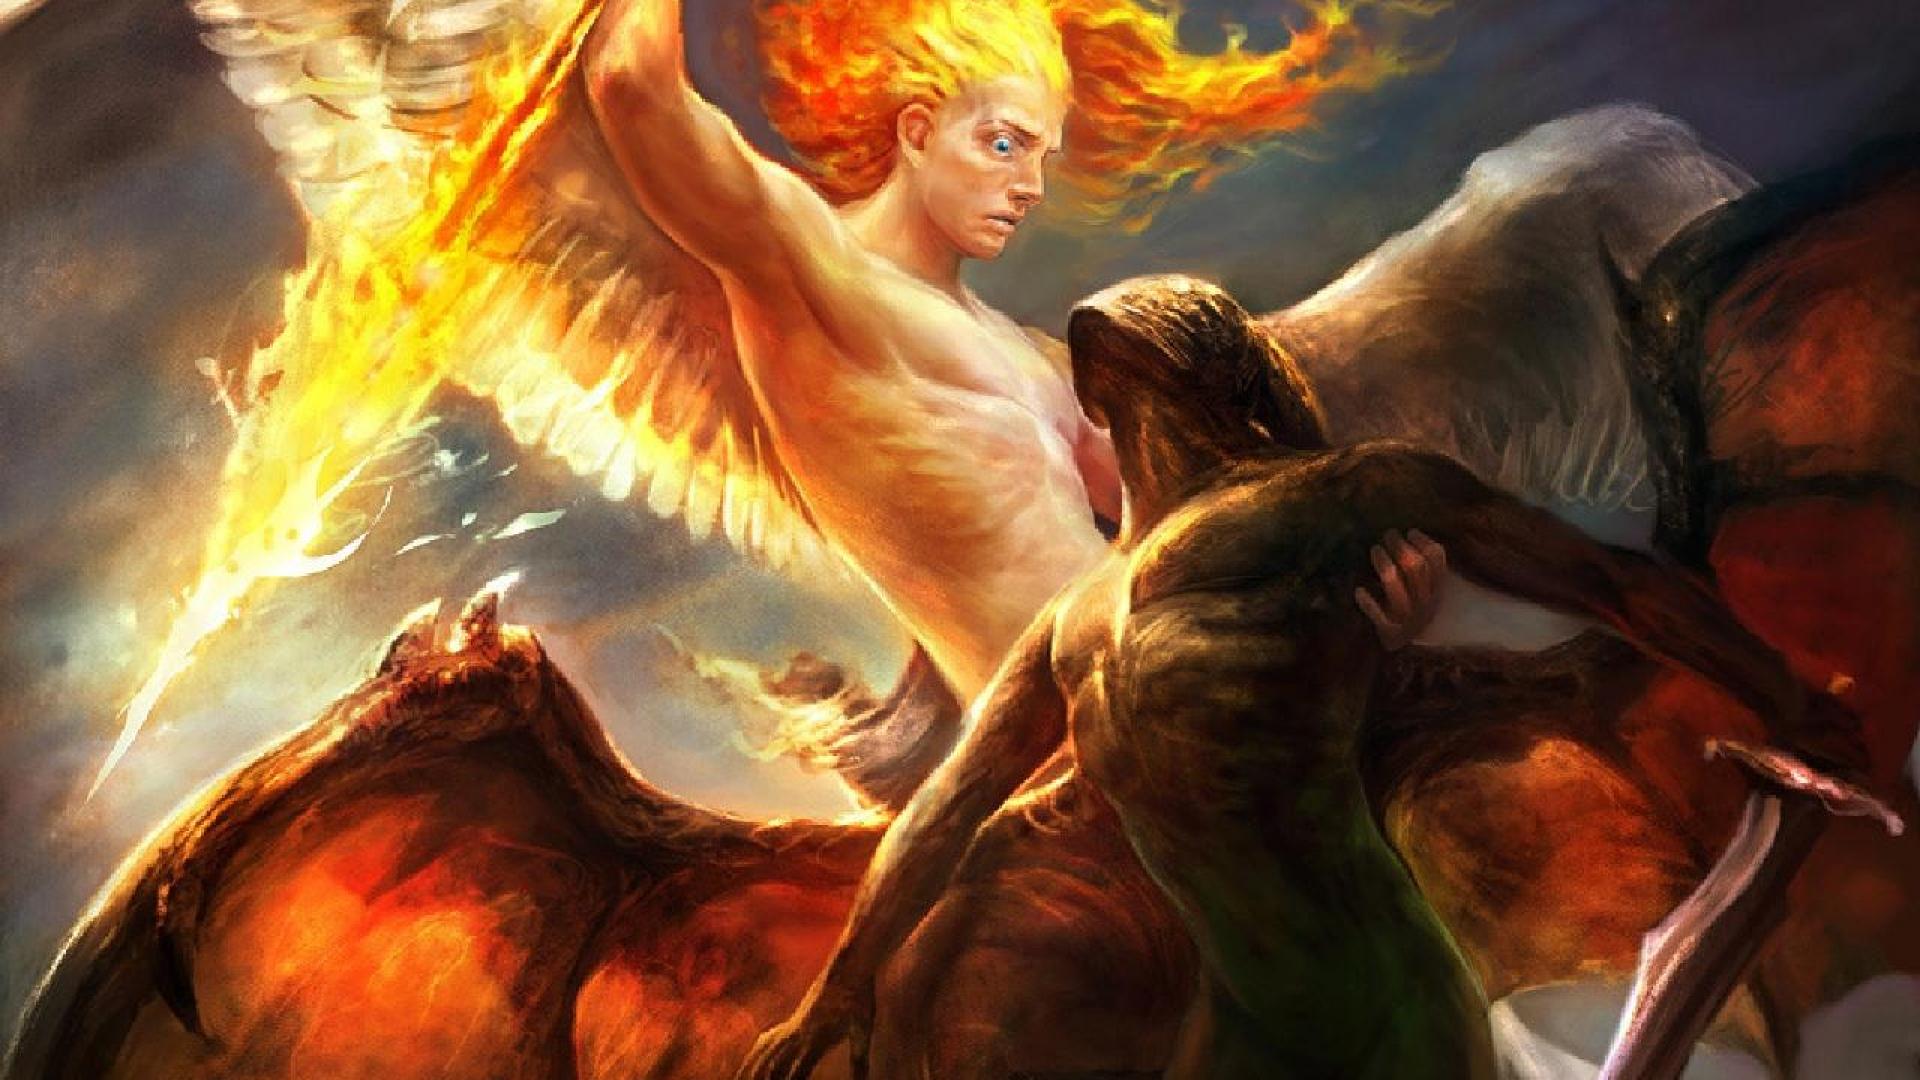 Angel vs demon wallpaper - - HQ Desktop Wallpapers